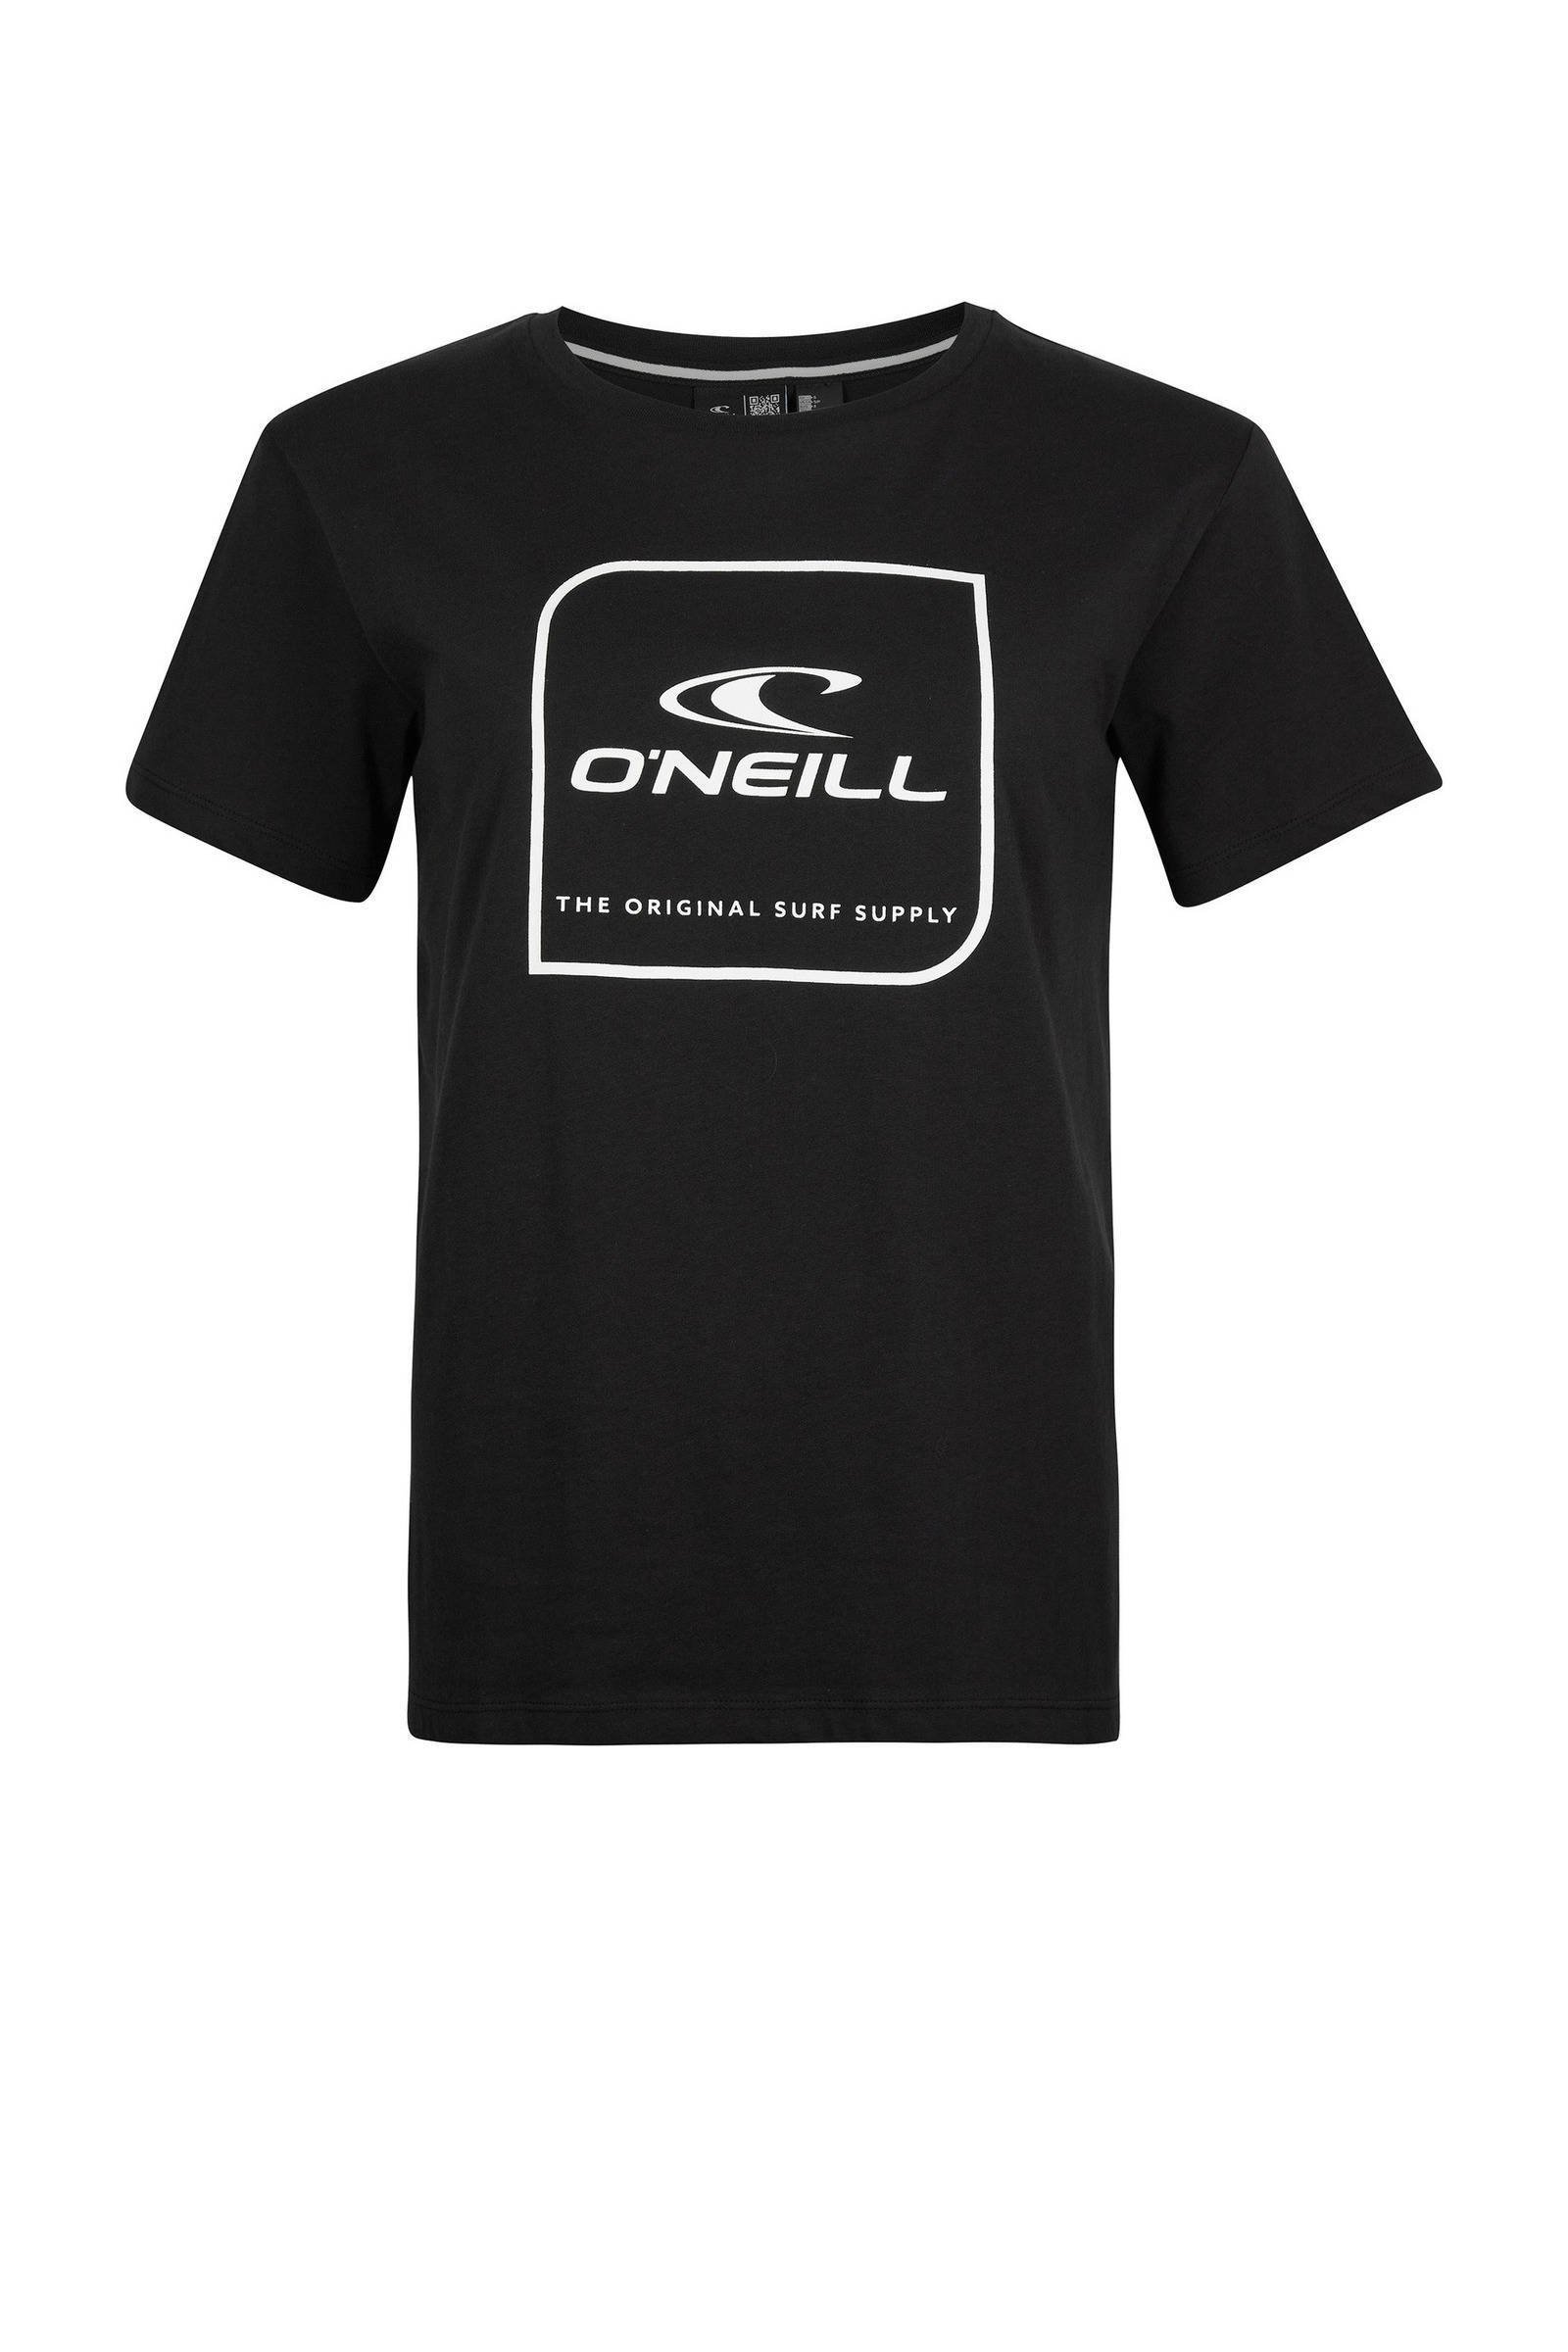 O'Neill T shirt van biologisch katoen zwart online kopen